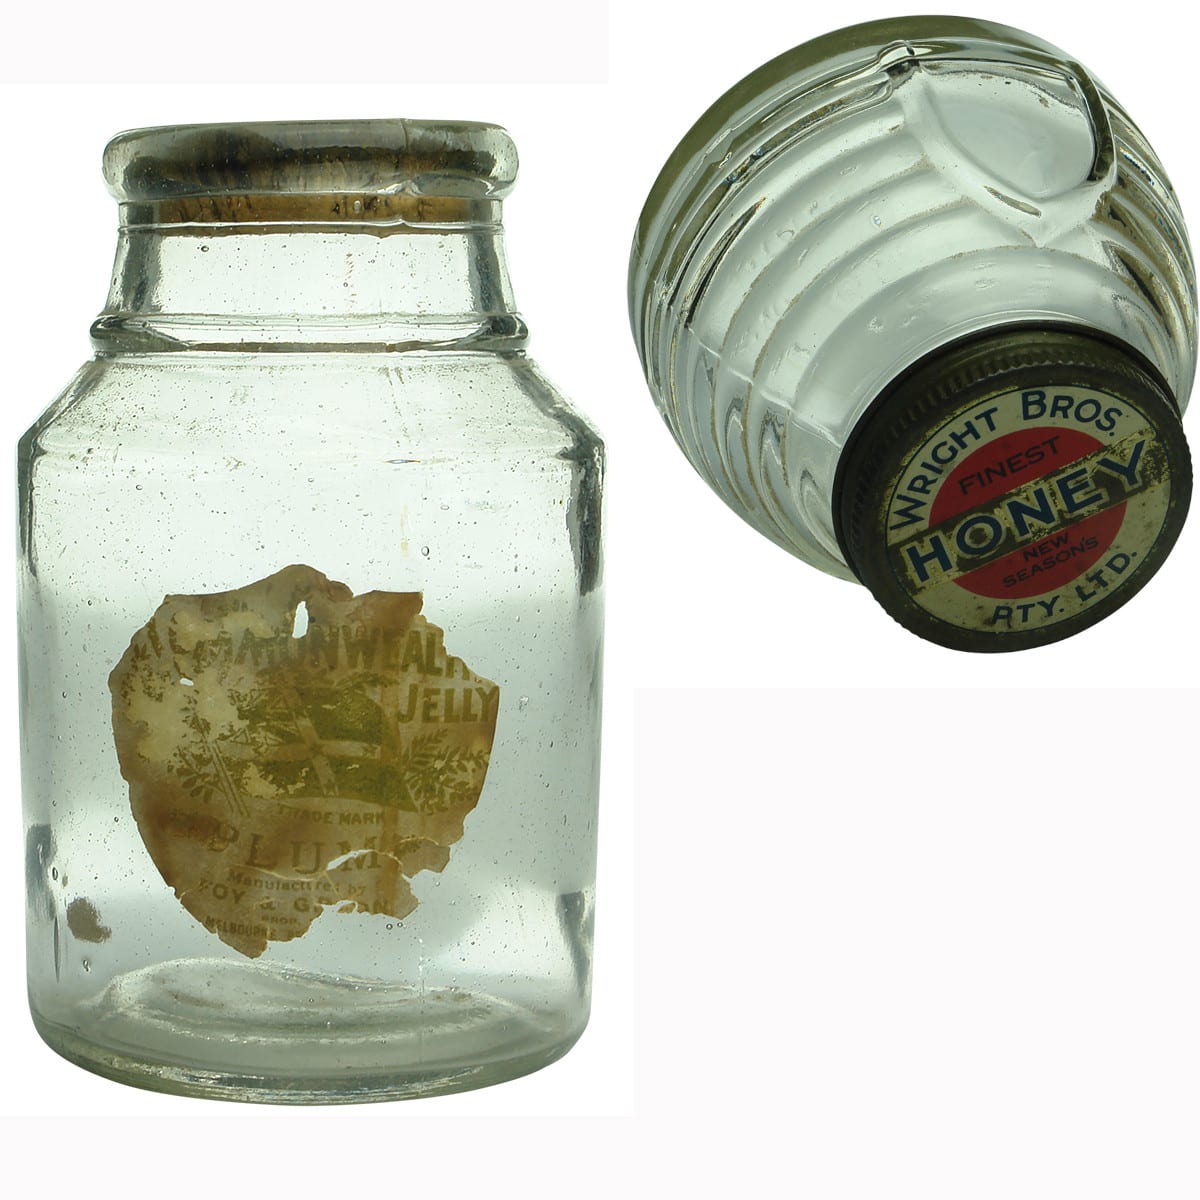 Pair of Jars: Plain jam jar with Commonwealth Jelly label and Beehive shape Honey Jar from Wright Bros Prahran.